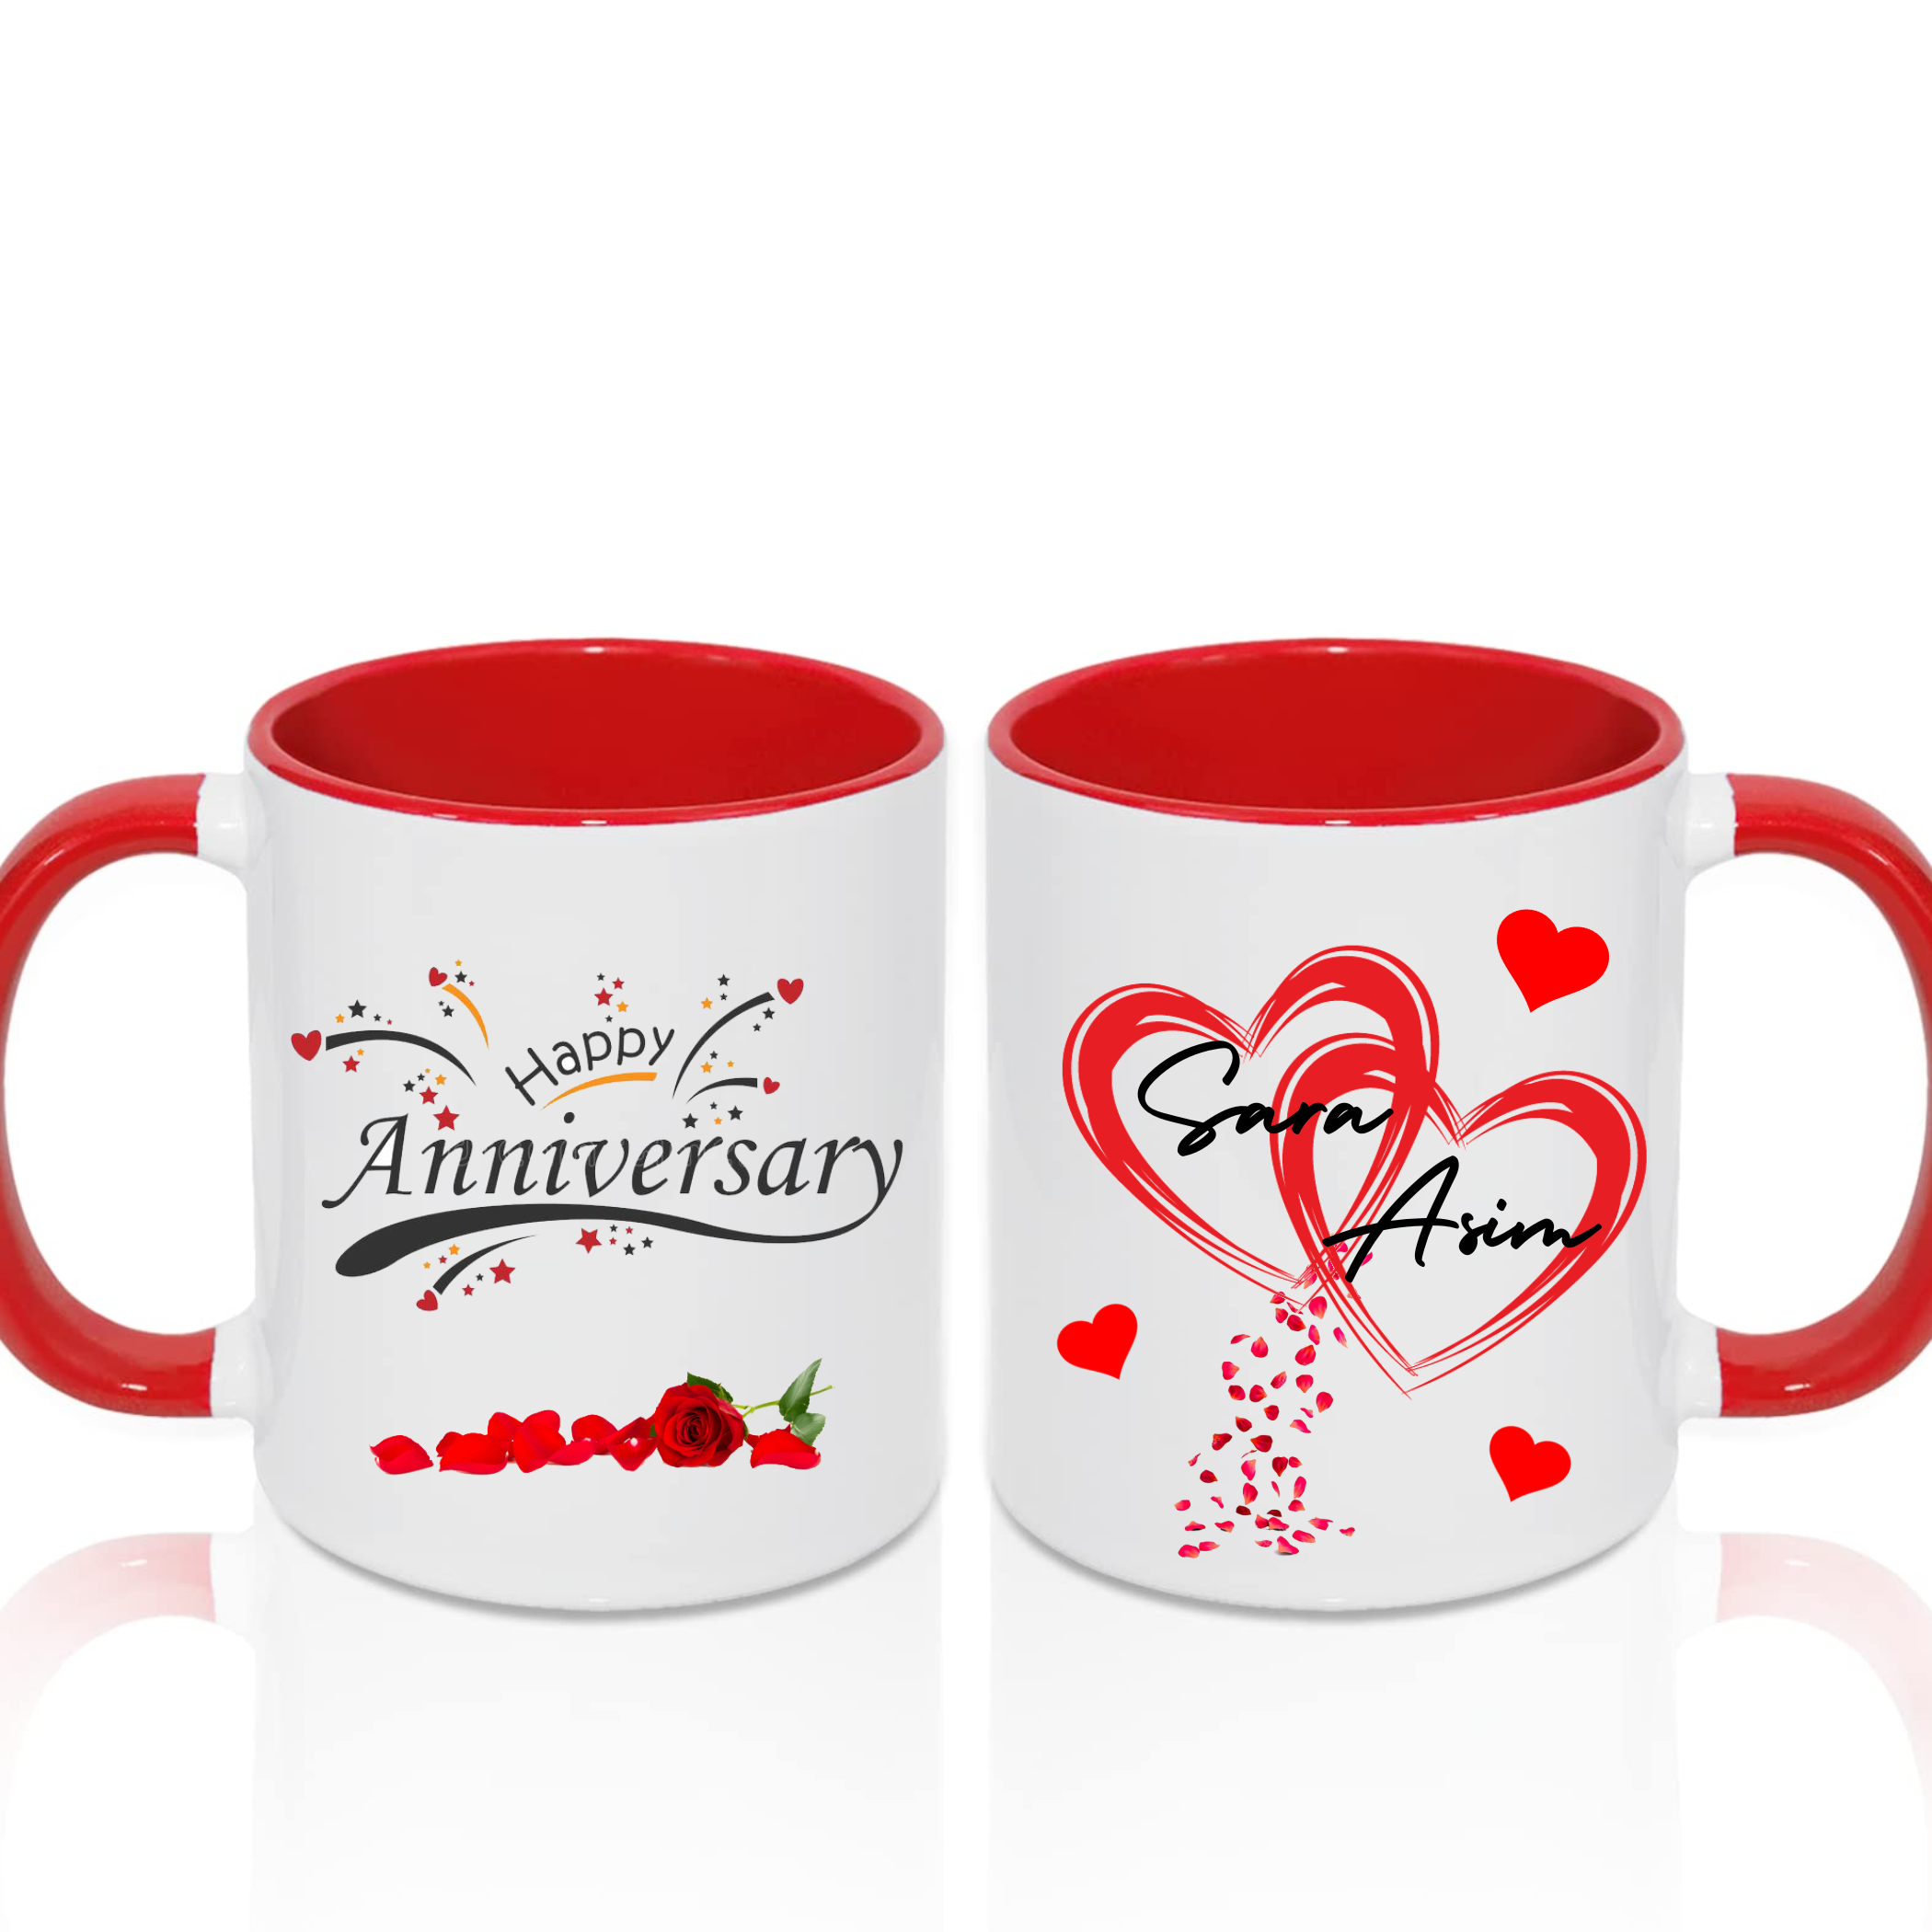 Wedding anniversary - Customize mug - Gift for couple - Happy anniversary -  Wedding gift - Anniversary gift - Gift for couple - Gift item